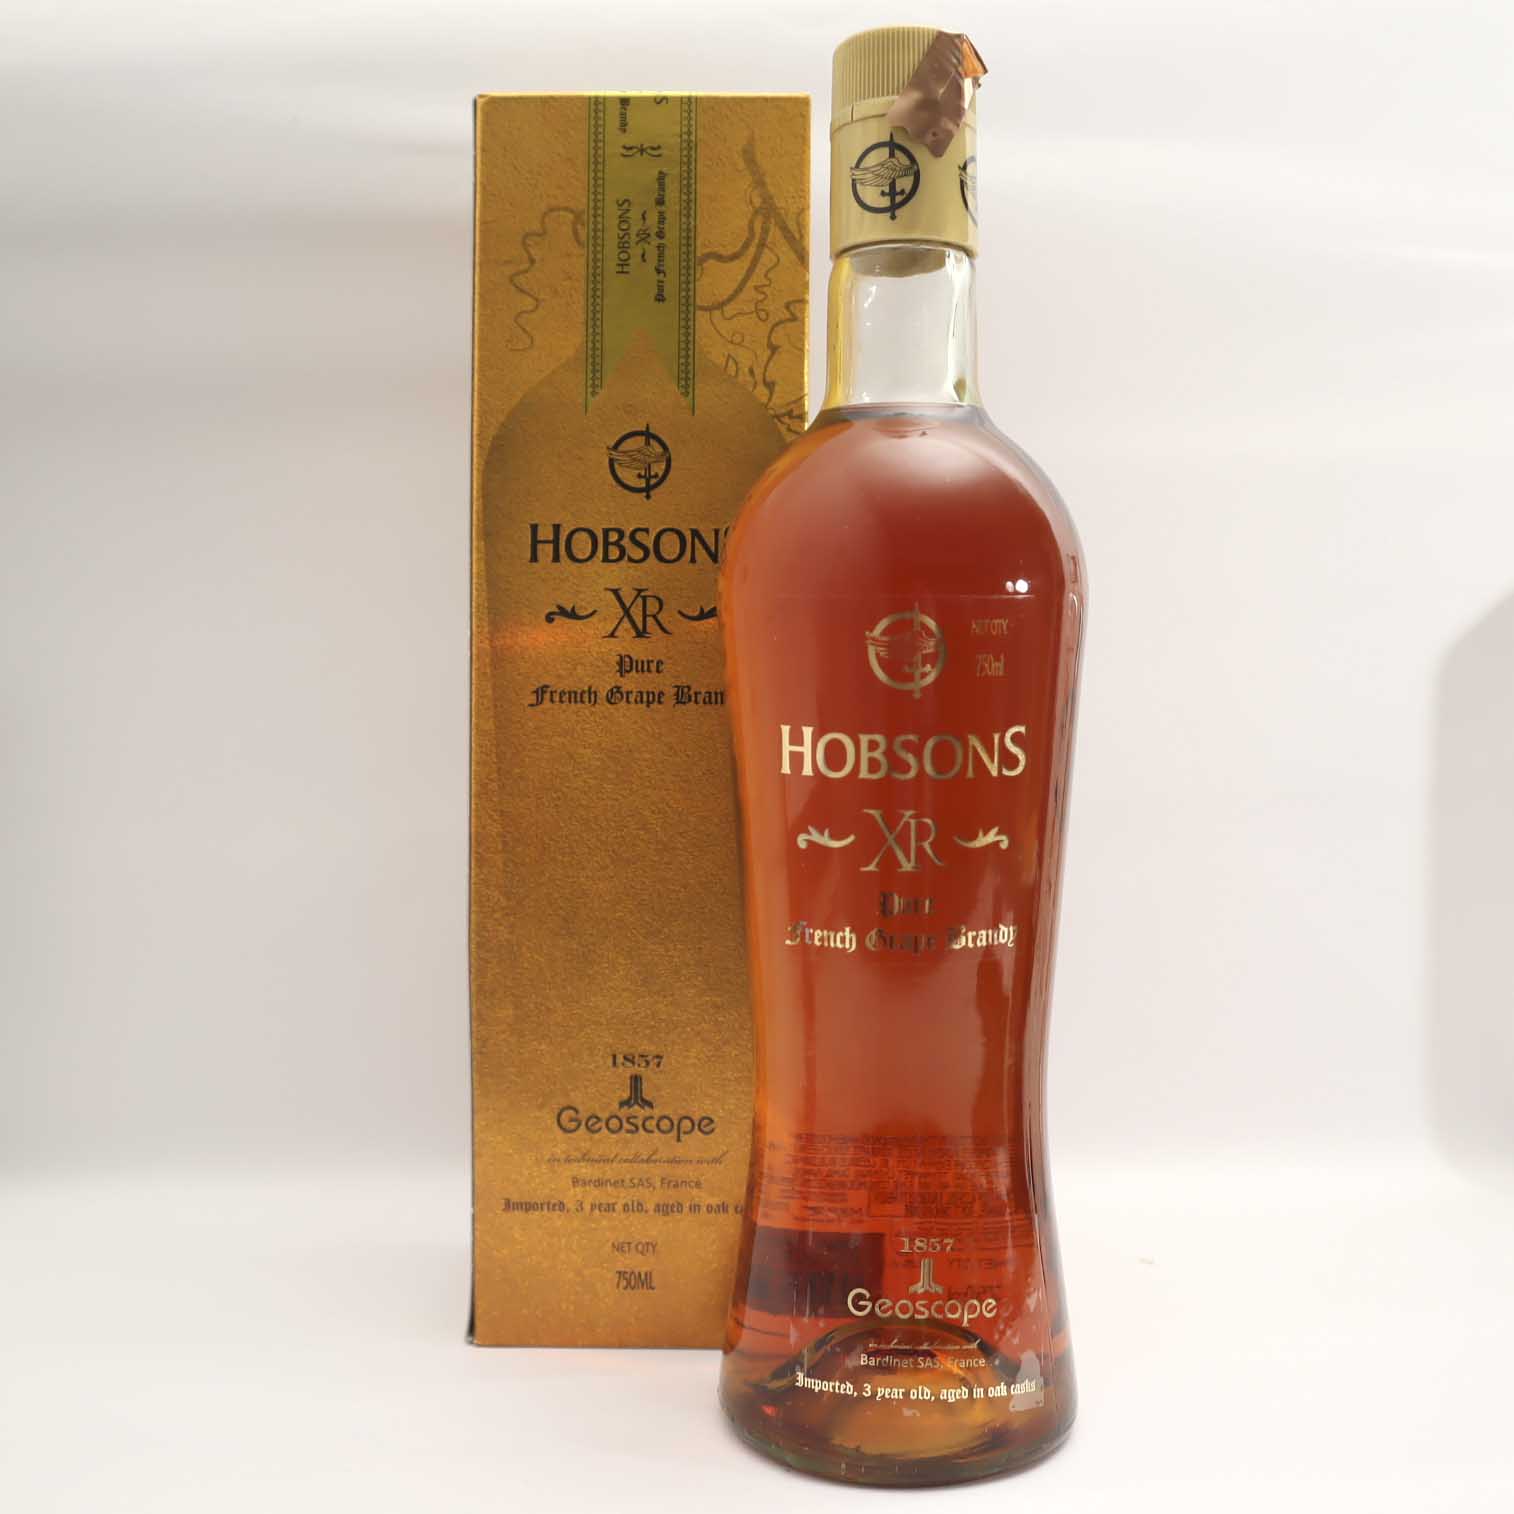 Hobsons Xr French Grape Brandy 750ml Toms Wine Goa